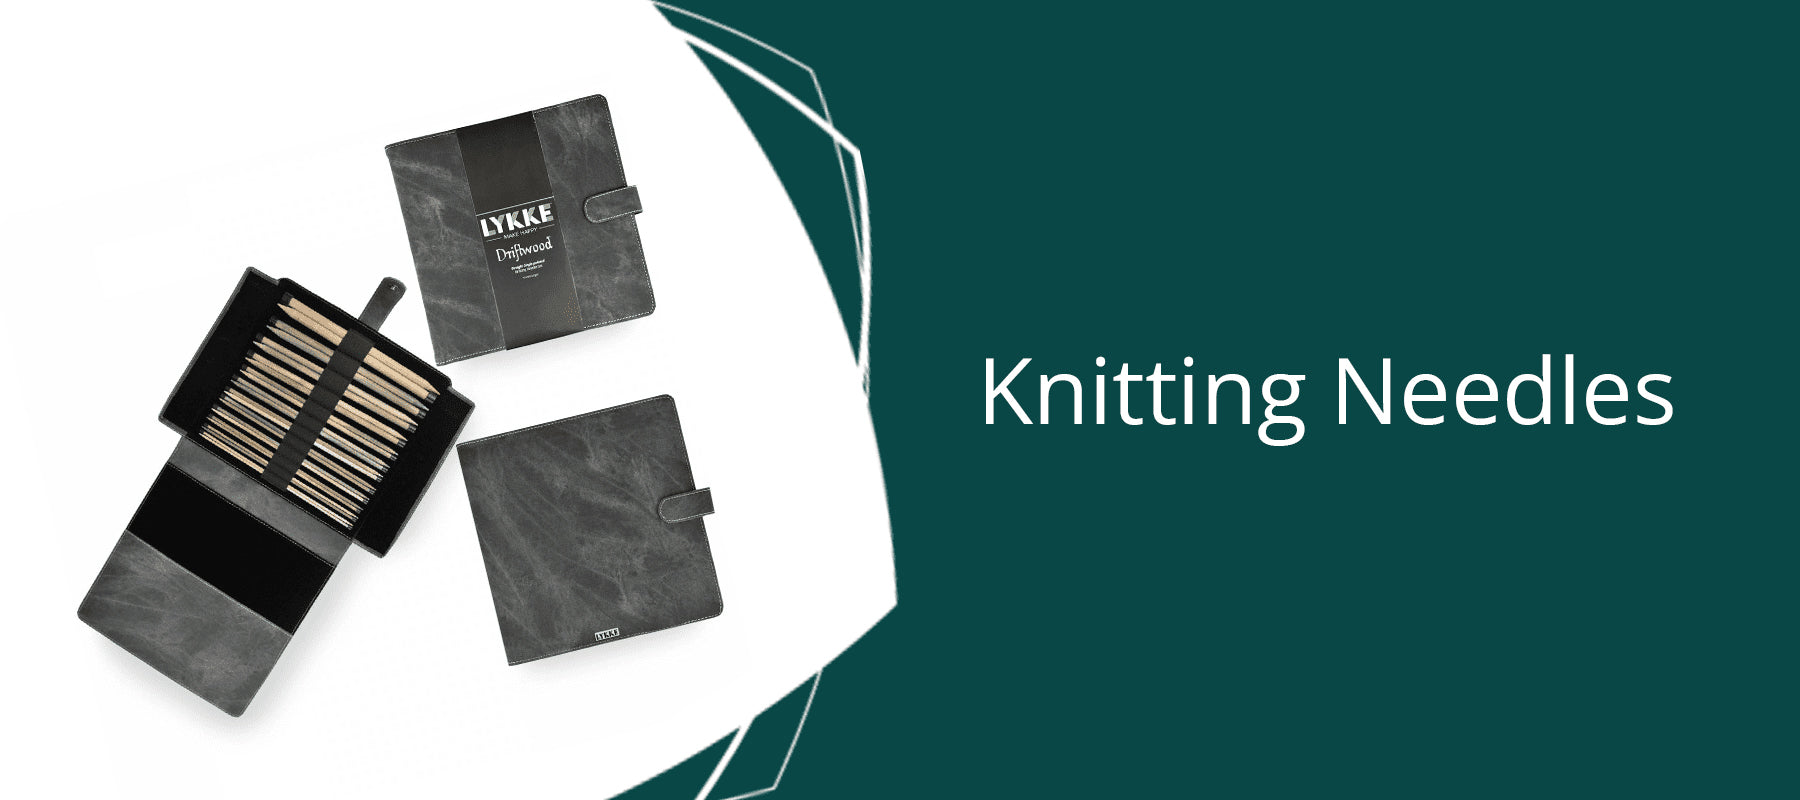 Buy knitting needles - Thread Collective Australia